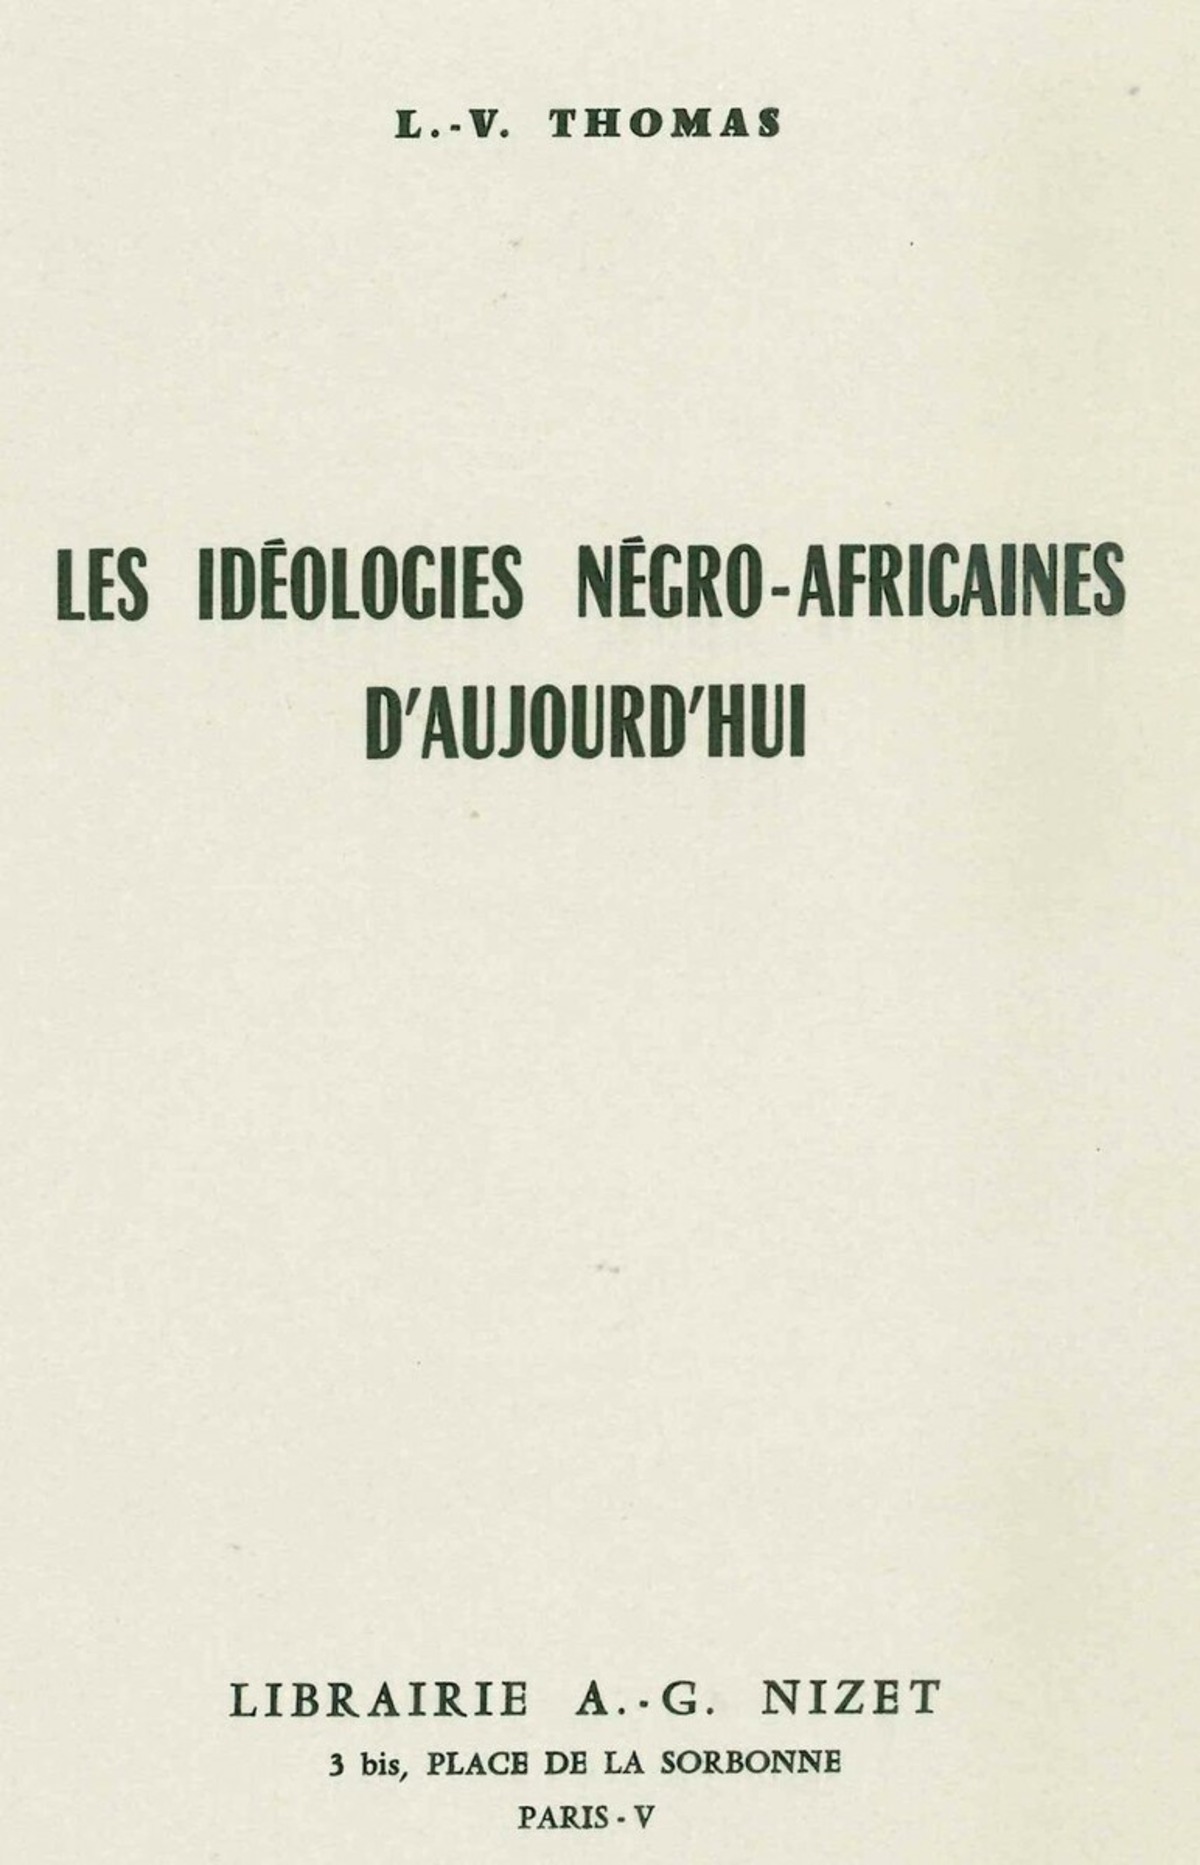 Les Idéologies négro-africaines aujourd'hu